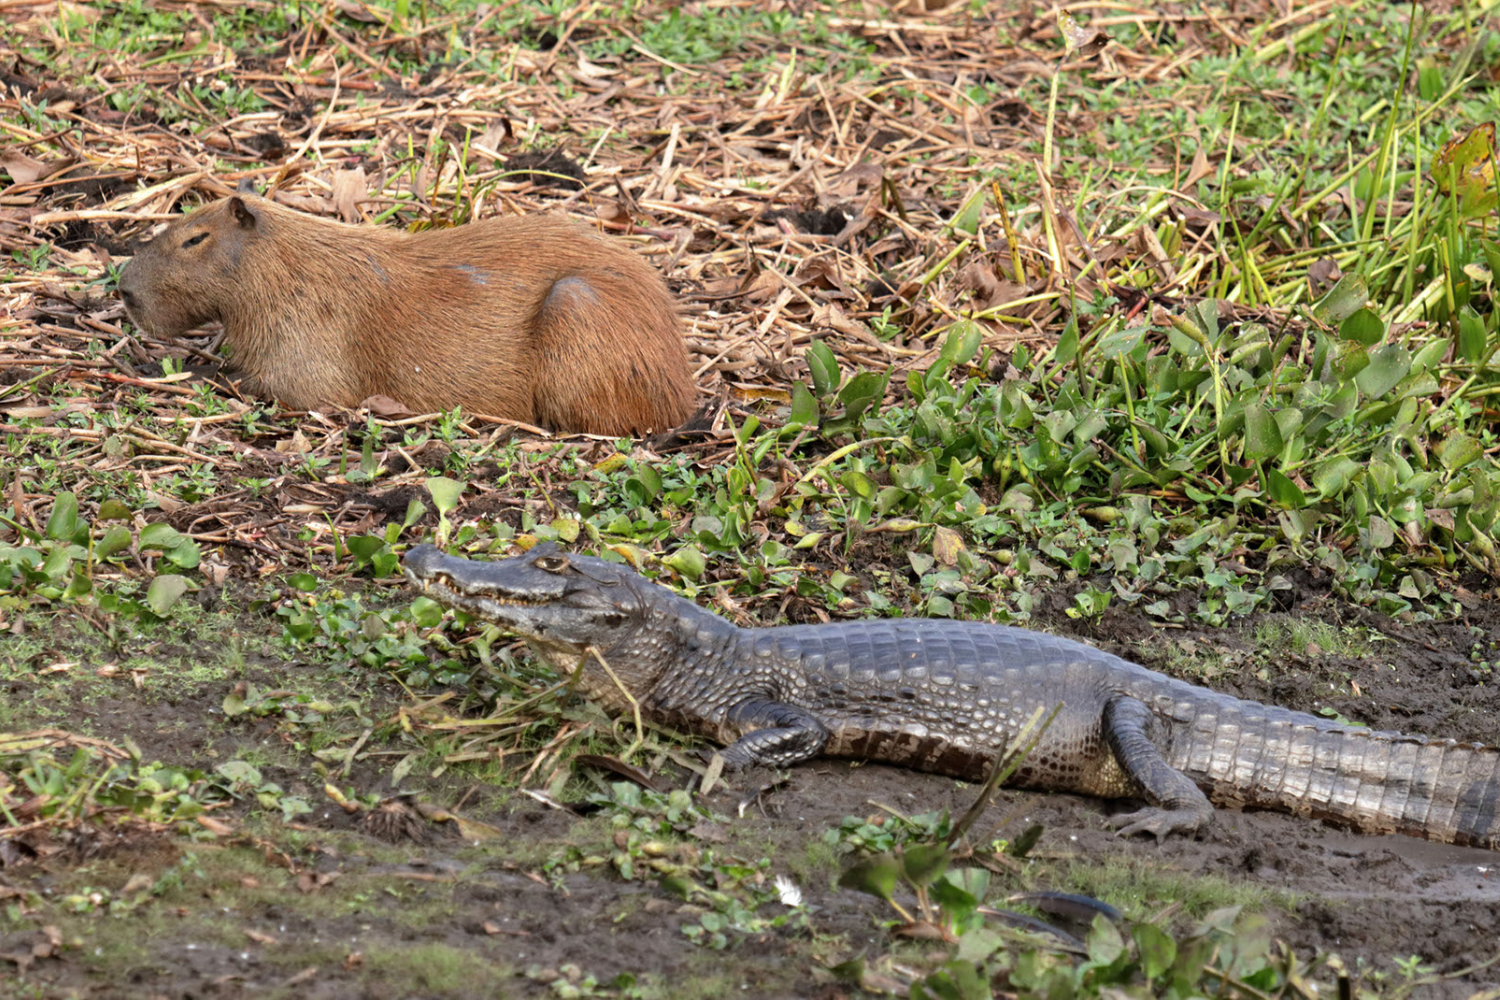 Why Do Crocodiles Like Capybaras